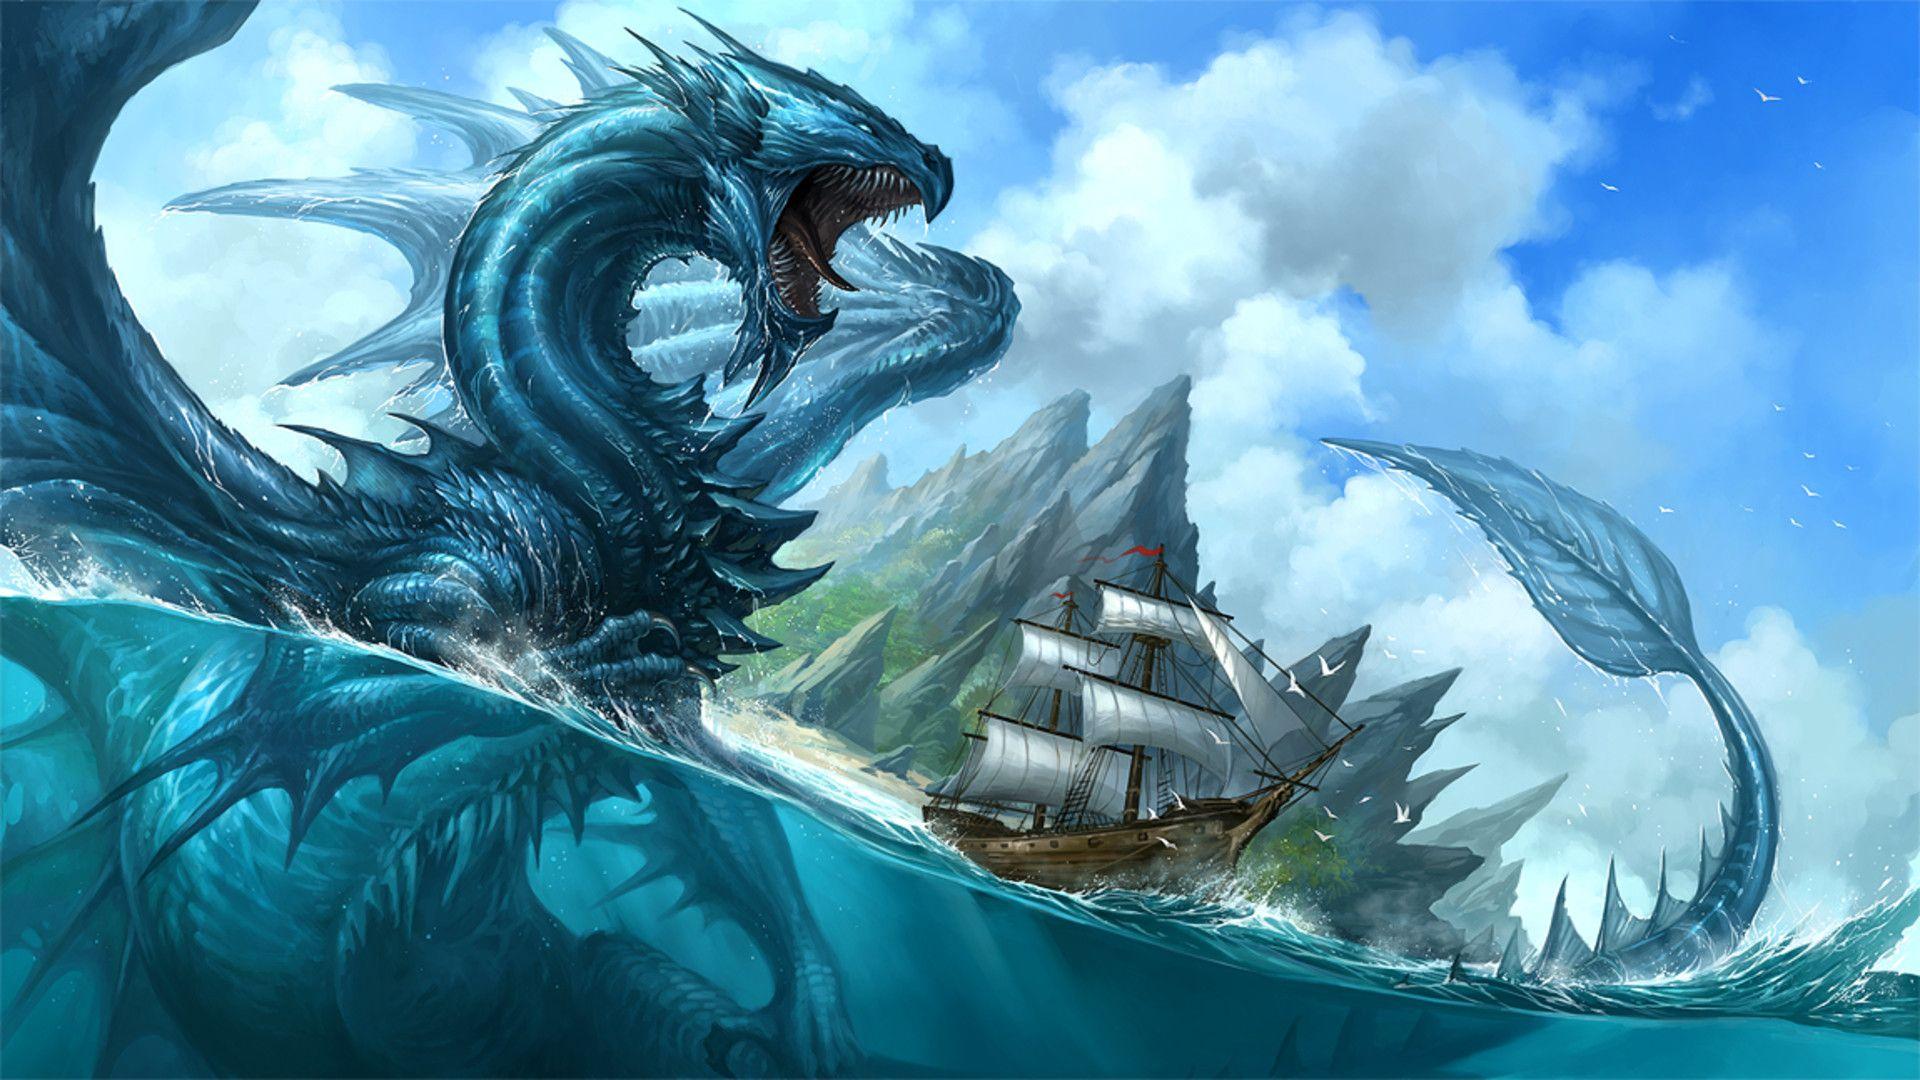 Cool Water Dragons Wallpaper